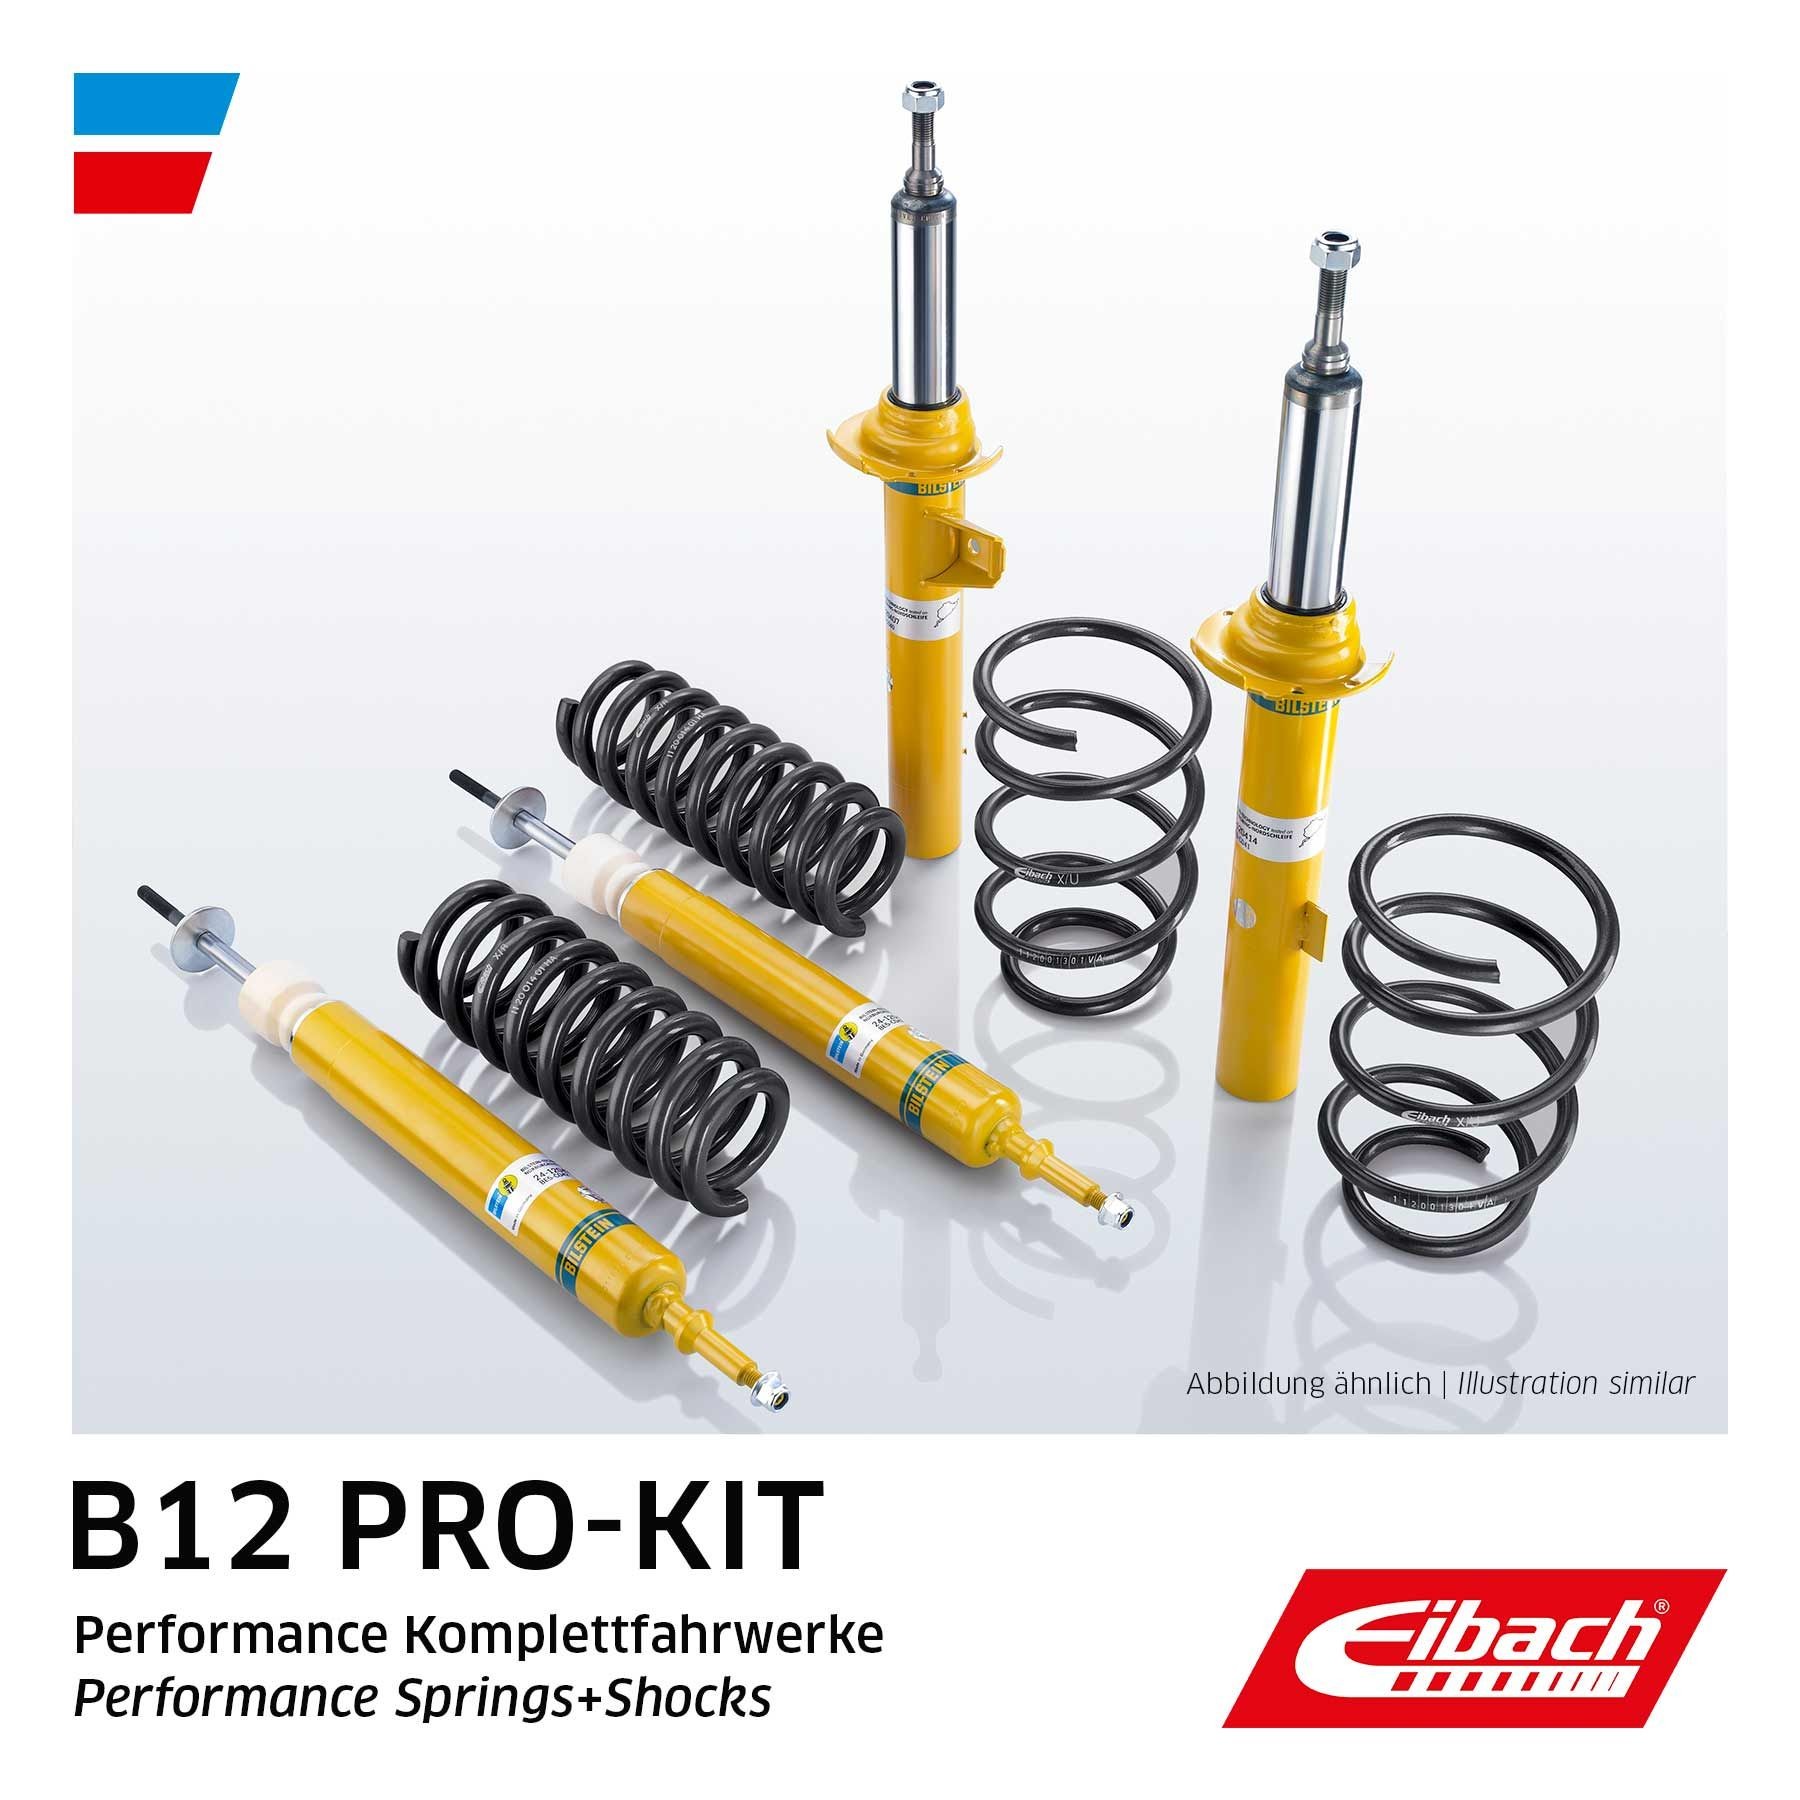 EIBACH B12 Pro-Kit Shock absorber set E90-85-009-02-22 buy